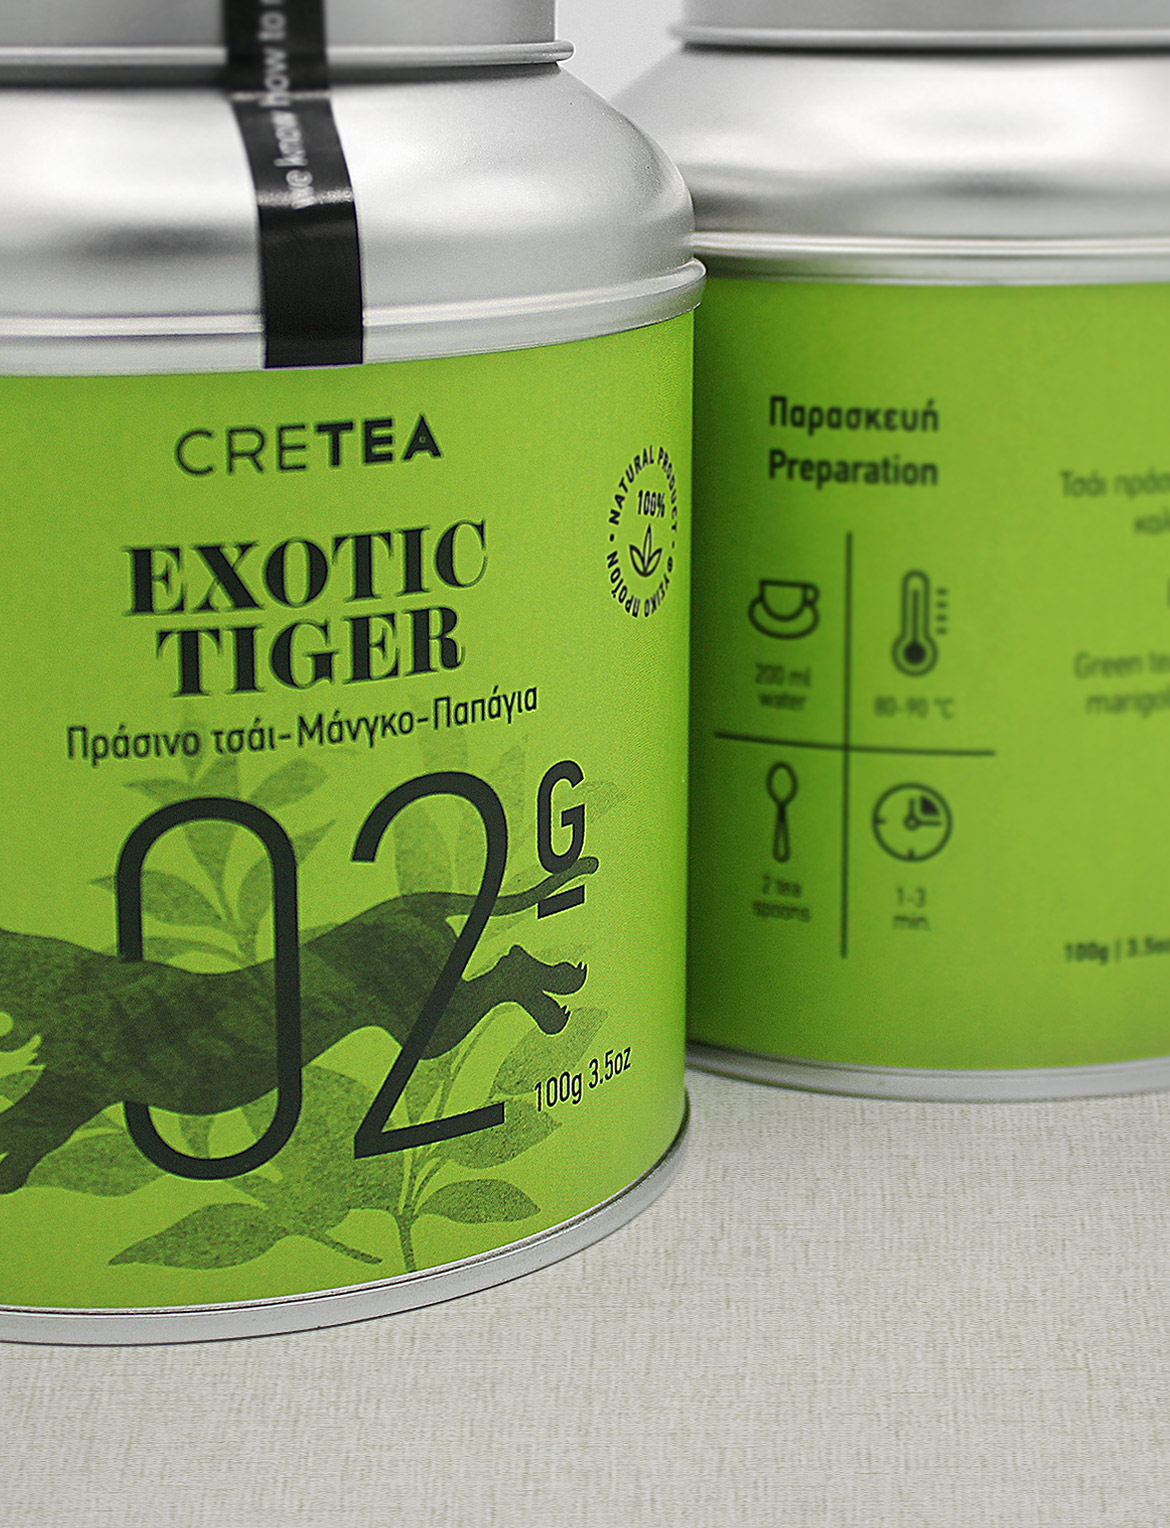 Cretea packaging detail